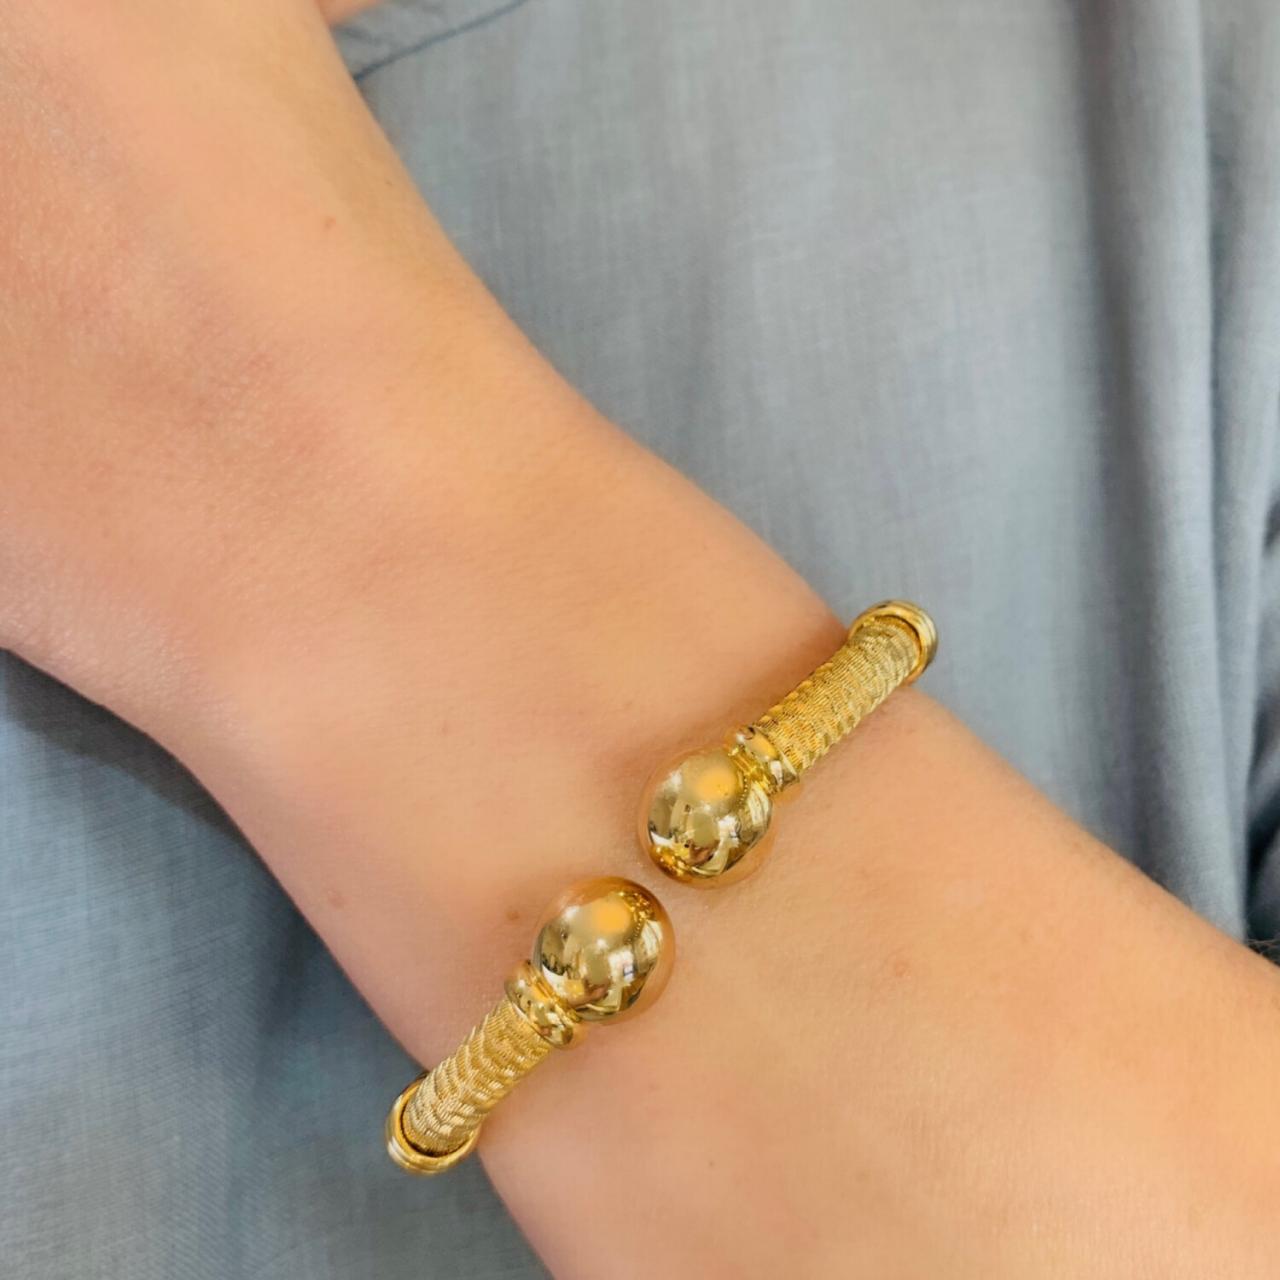 18ct Yellow Gold Textured & Spiral Design Wrist Cuff Bangle